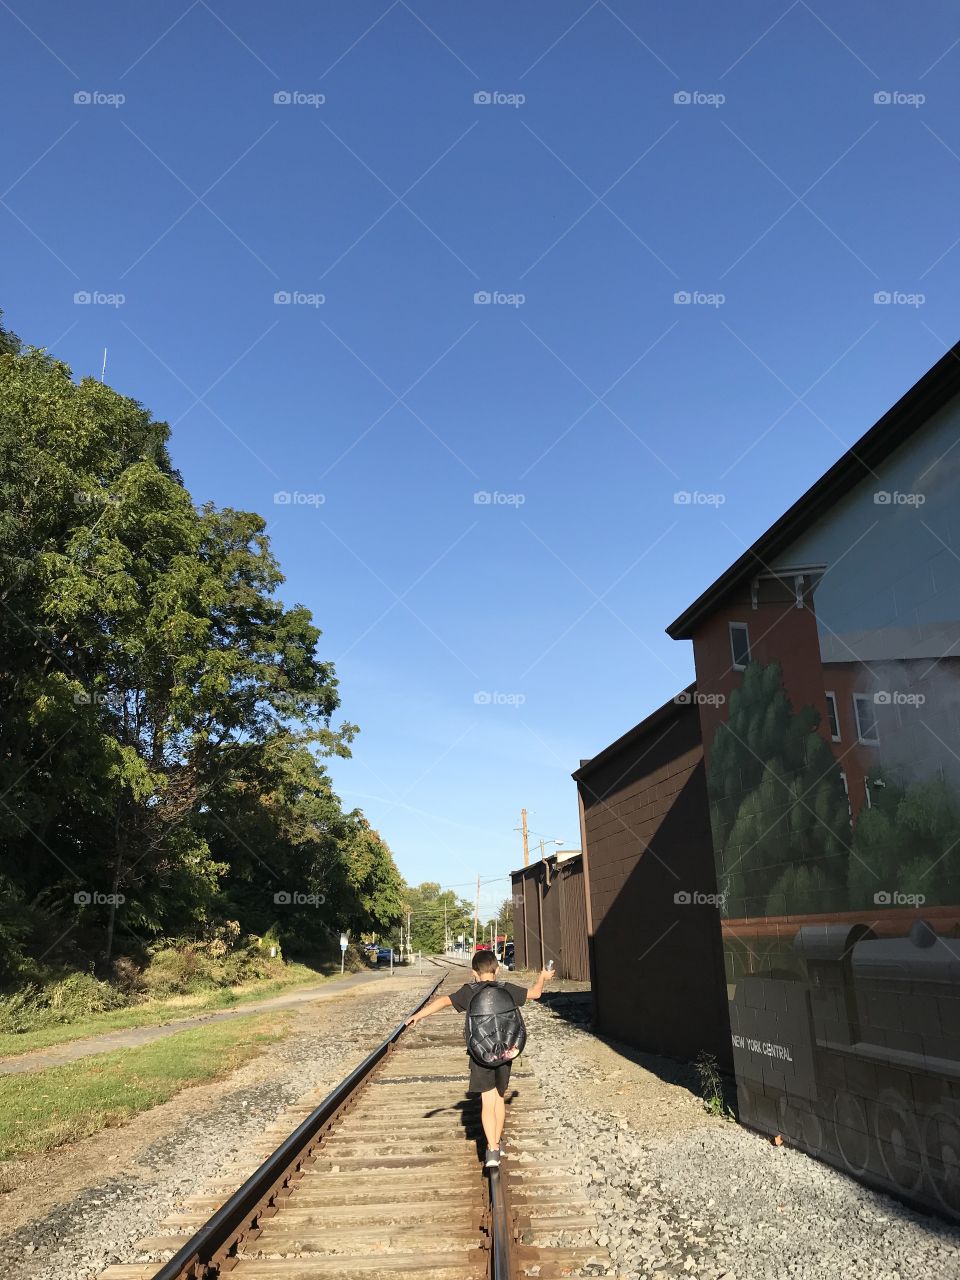 Walking on the train tracks